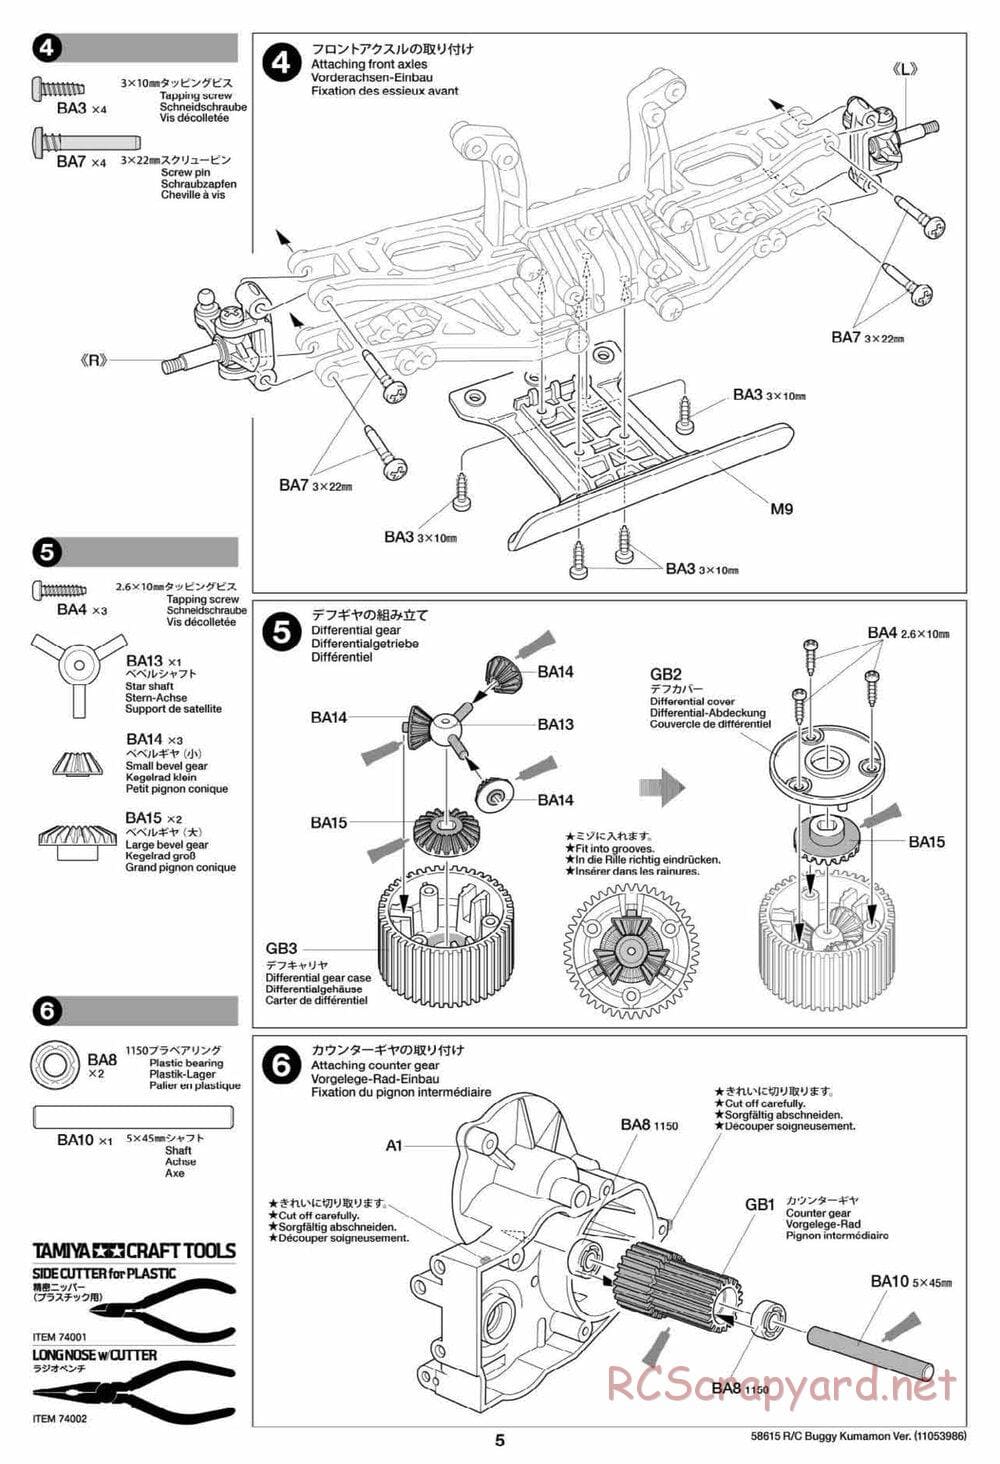 Tamiya - Buggy Kumamon Version Chassis - Manual - Page 5